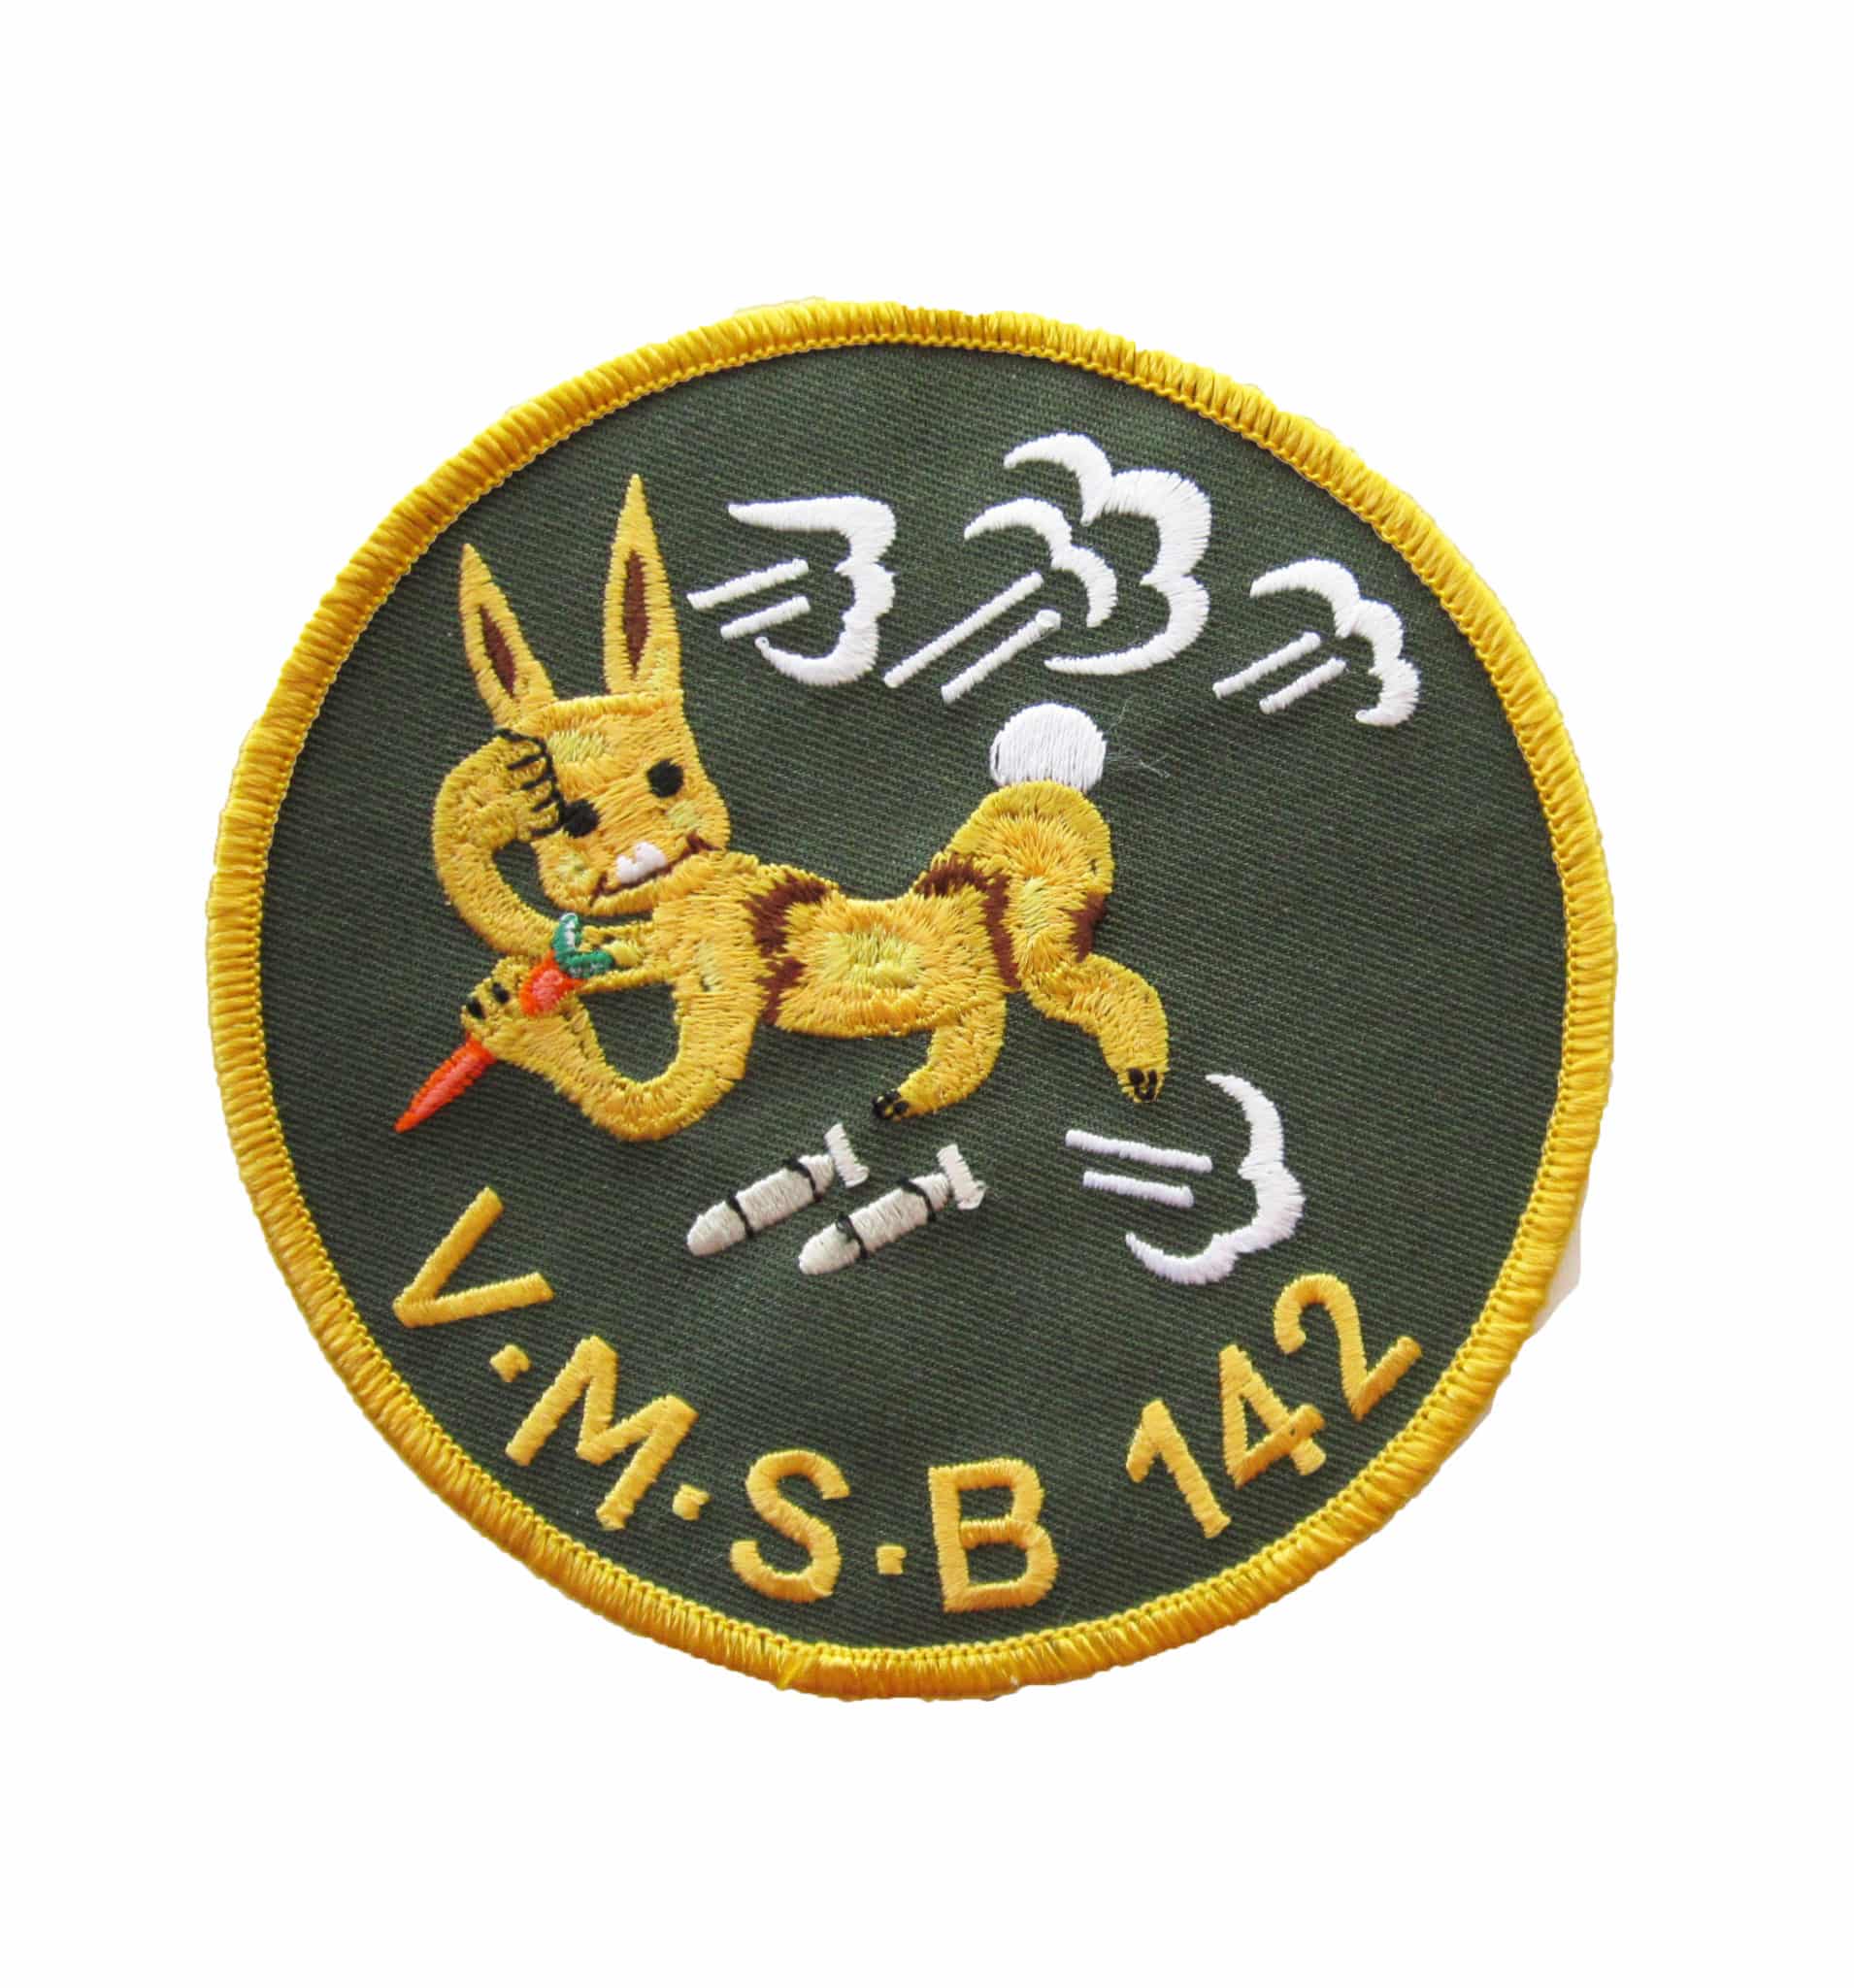 VMSB-142 Squadron Patch